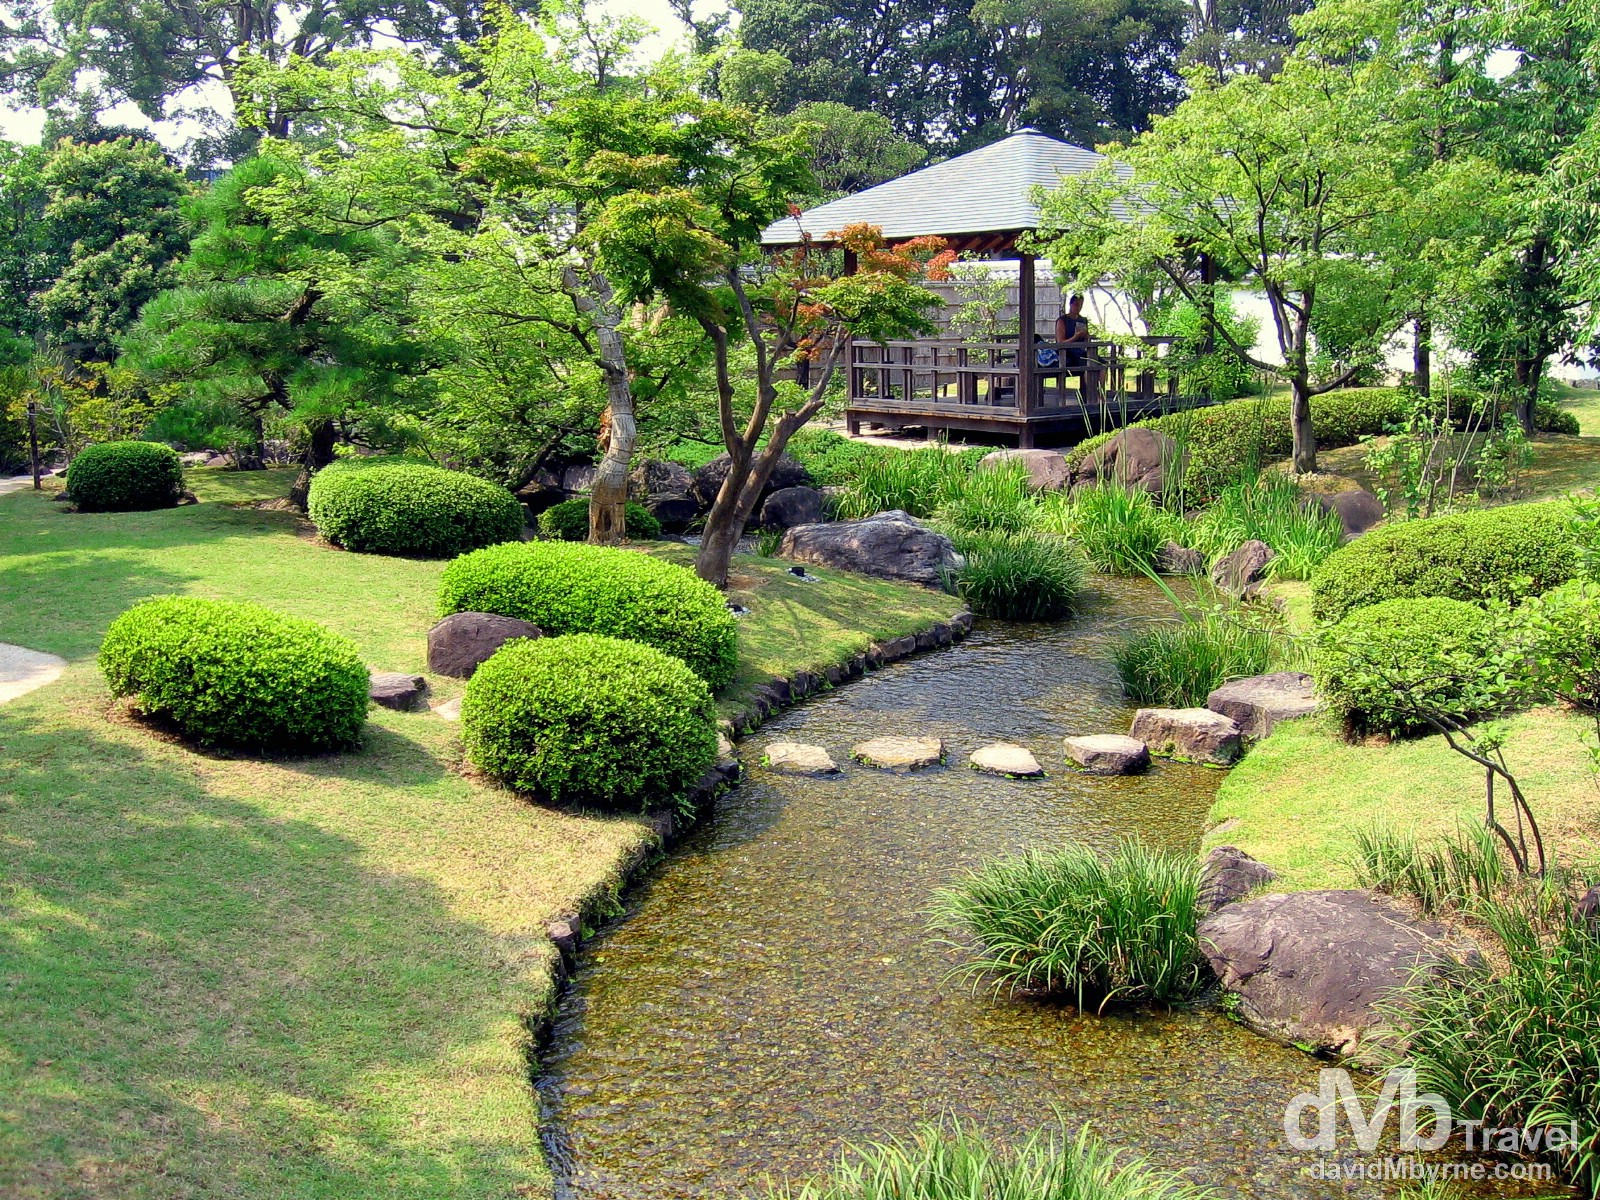 Koko-en Gardens in Himeji, Honshu, Japan. July 21st, 2005.